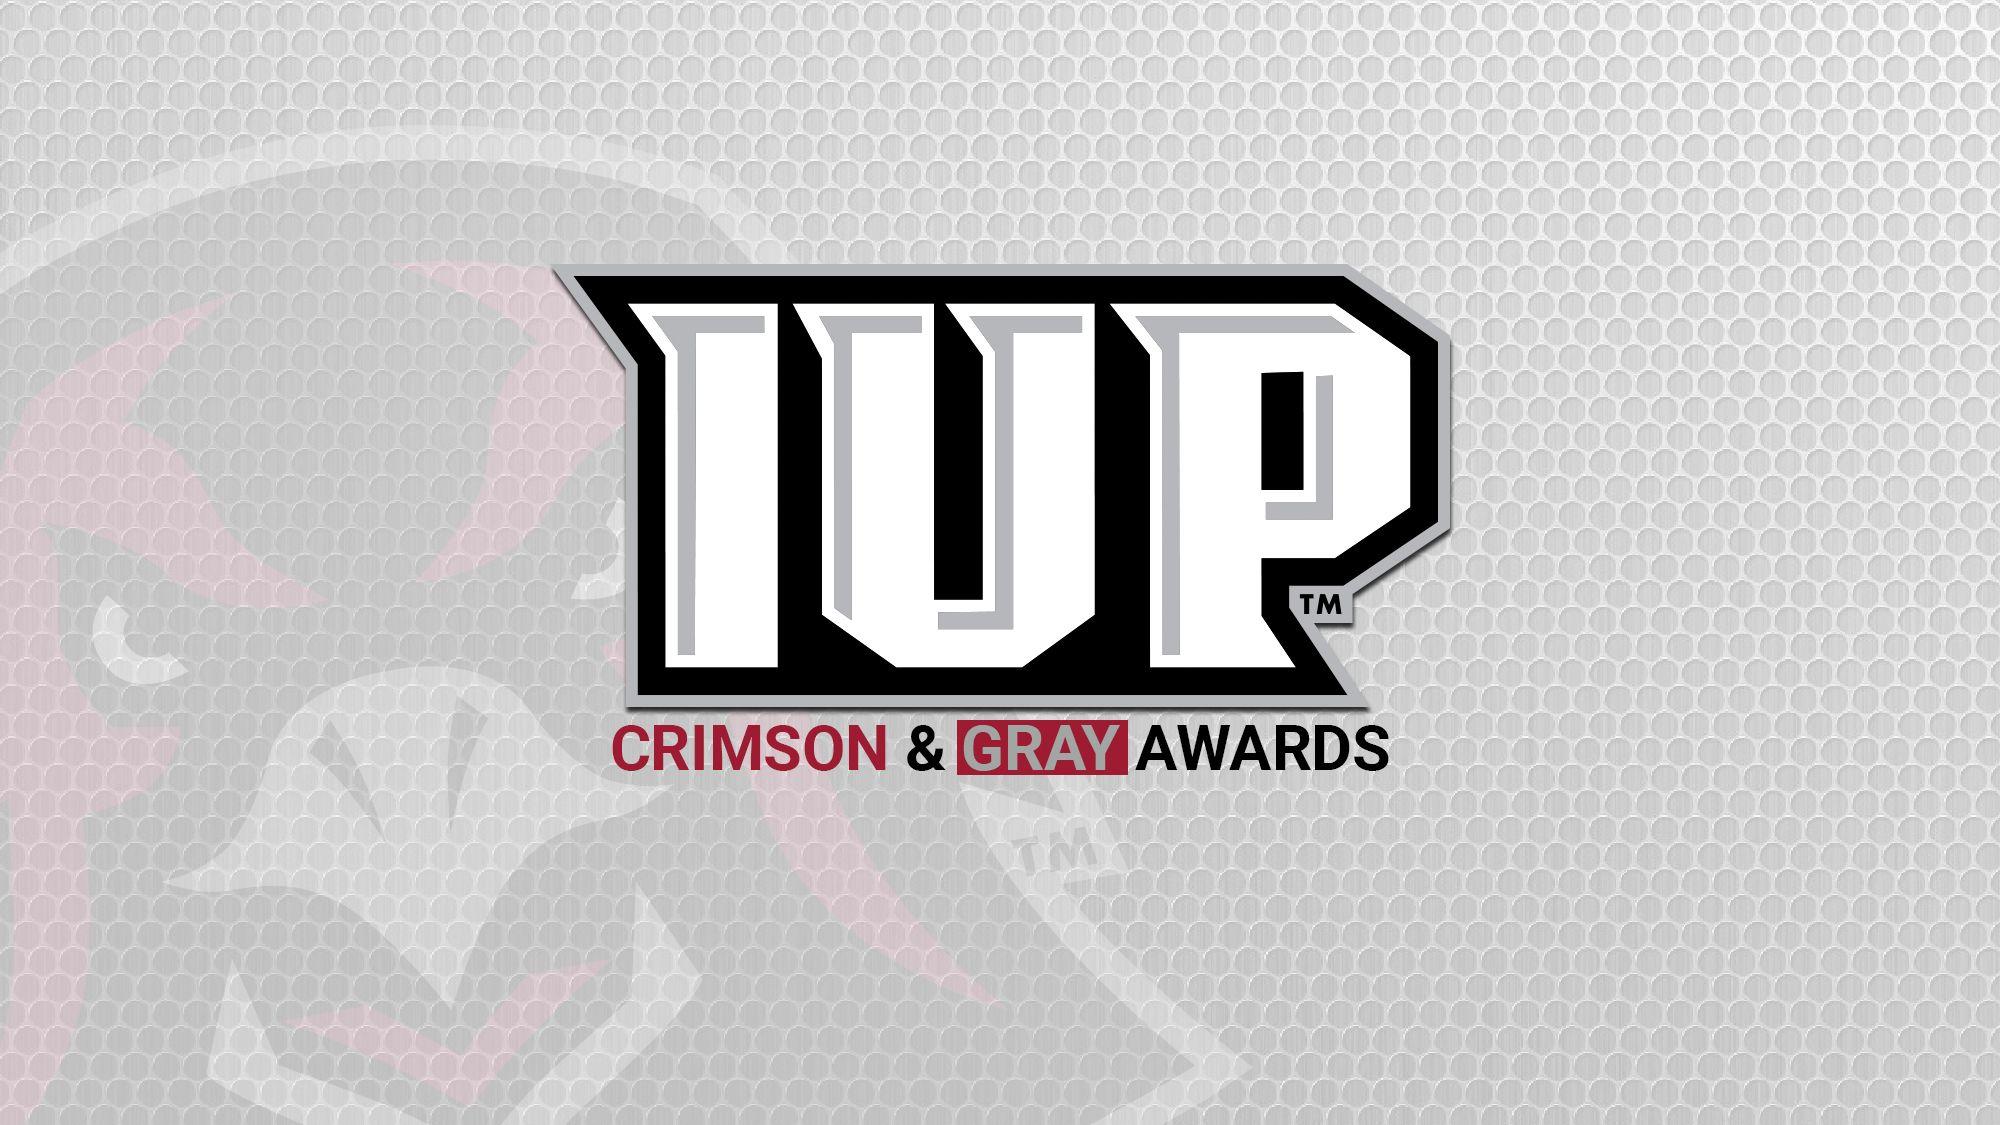 IUP Logo - 104 nominees announced for inaugural Crimson & Gray Awards - Indiana ...